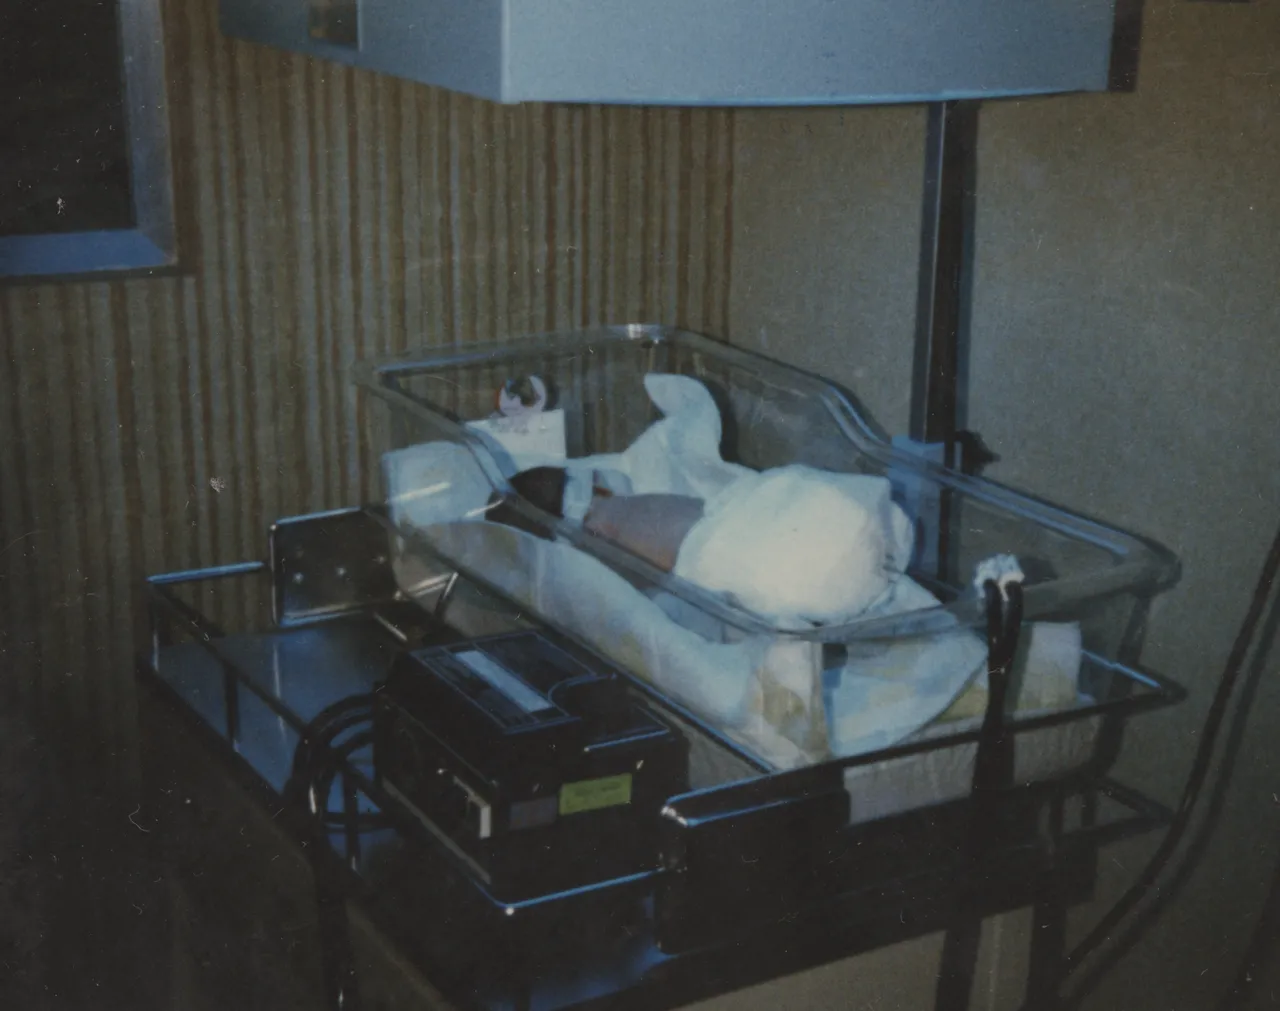 1985-02-11 Joey Arnold Newborn 05 Hospital Crib.png